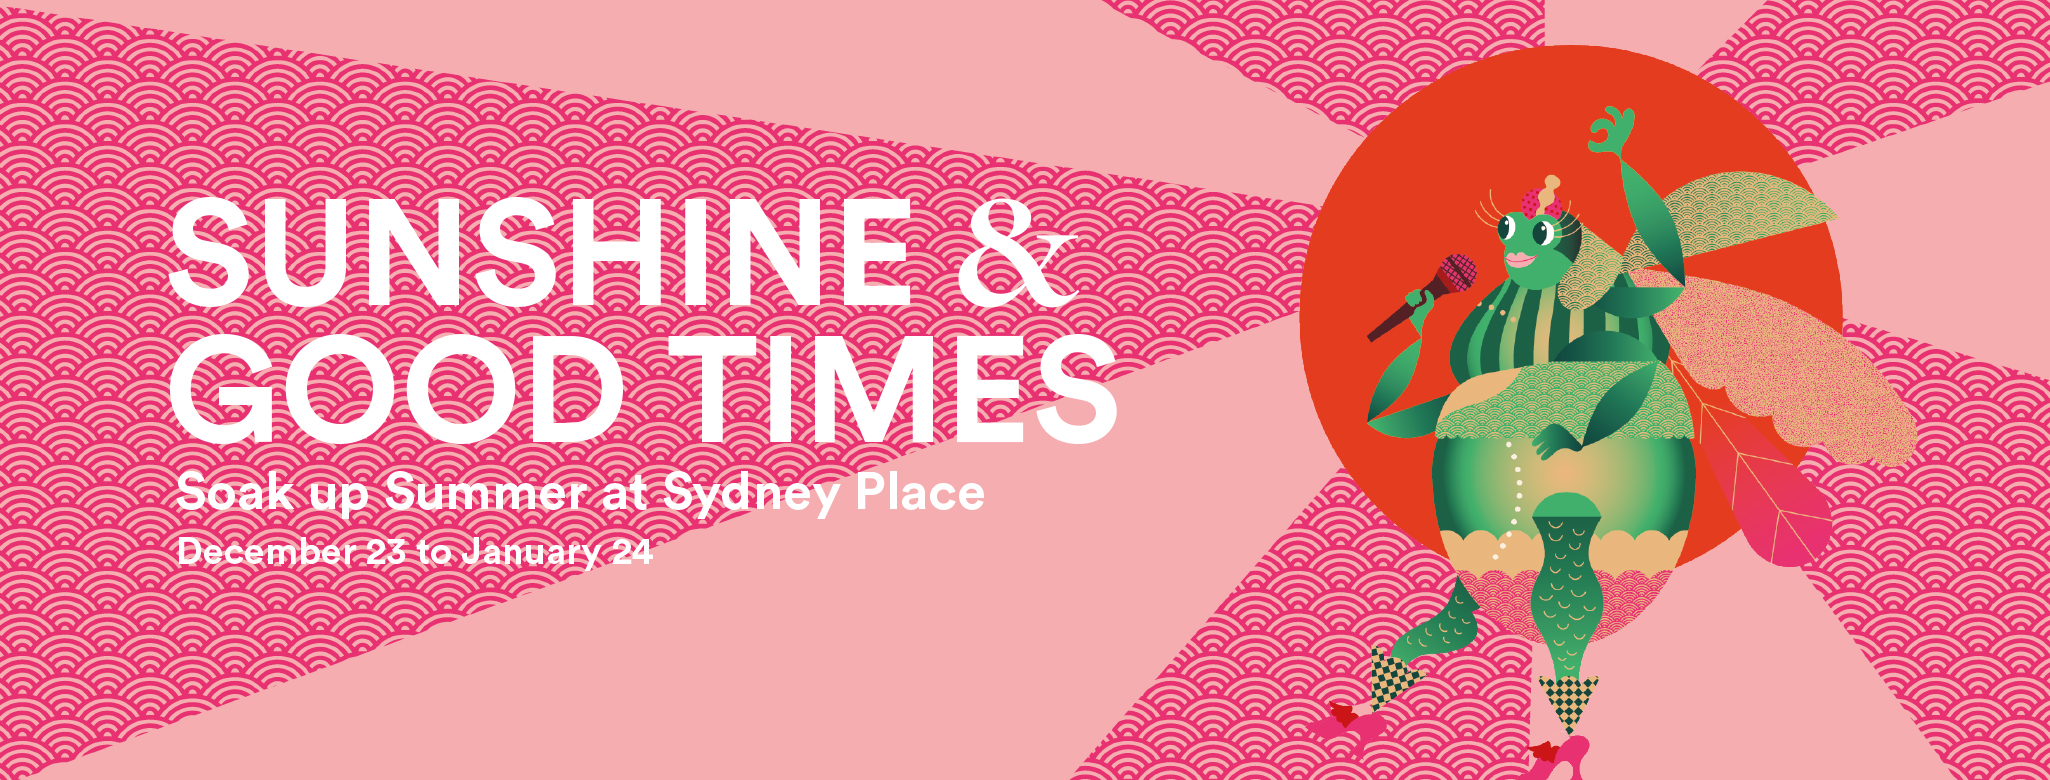 Sydney-Place-Web-Banner-2050x780.jpg